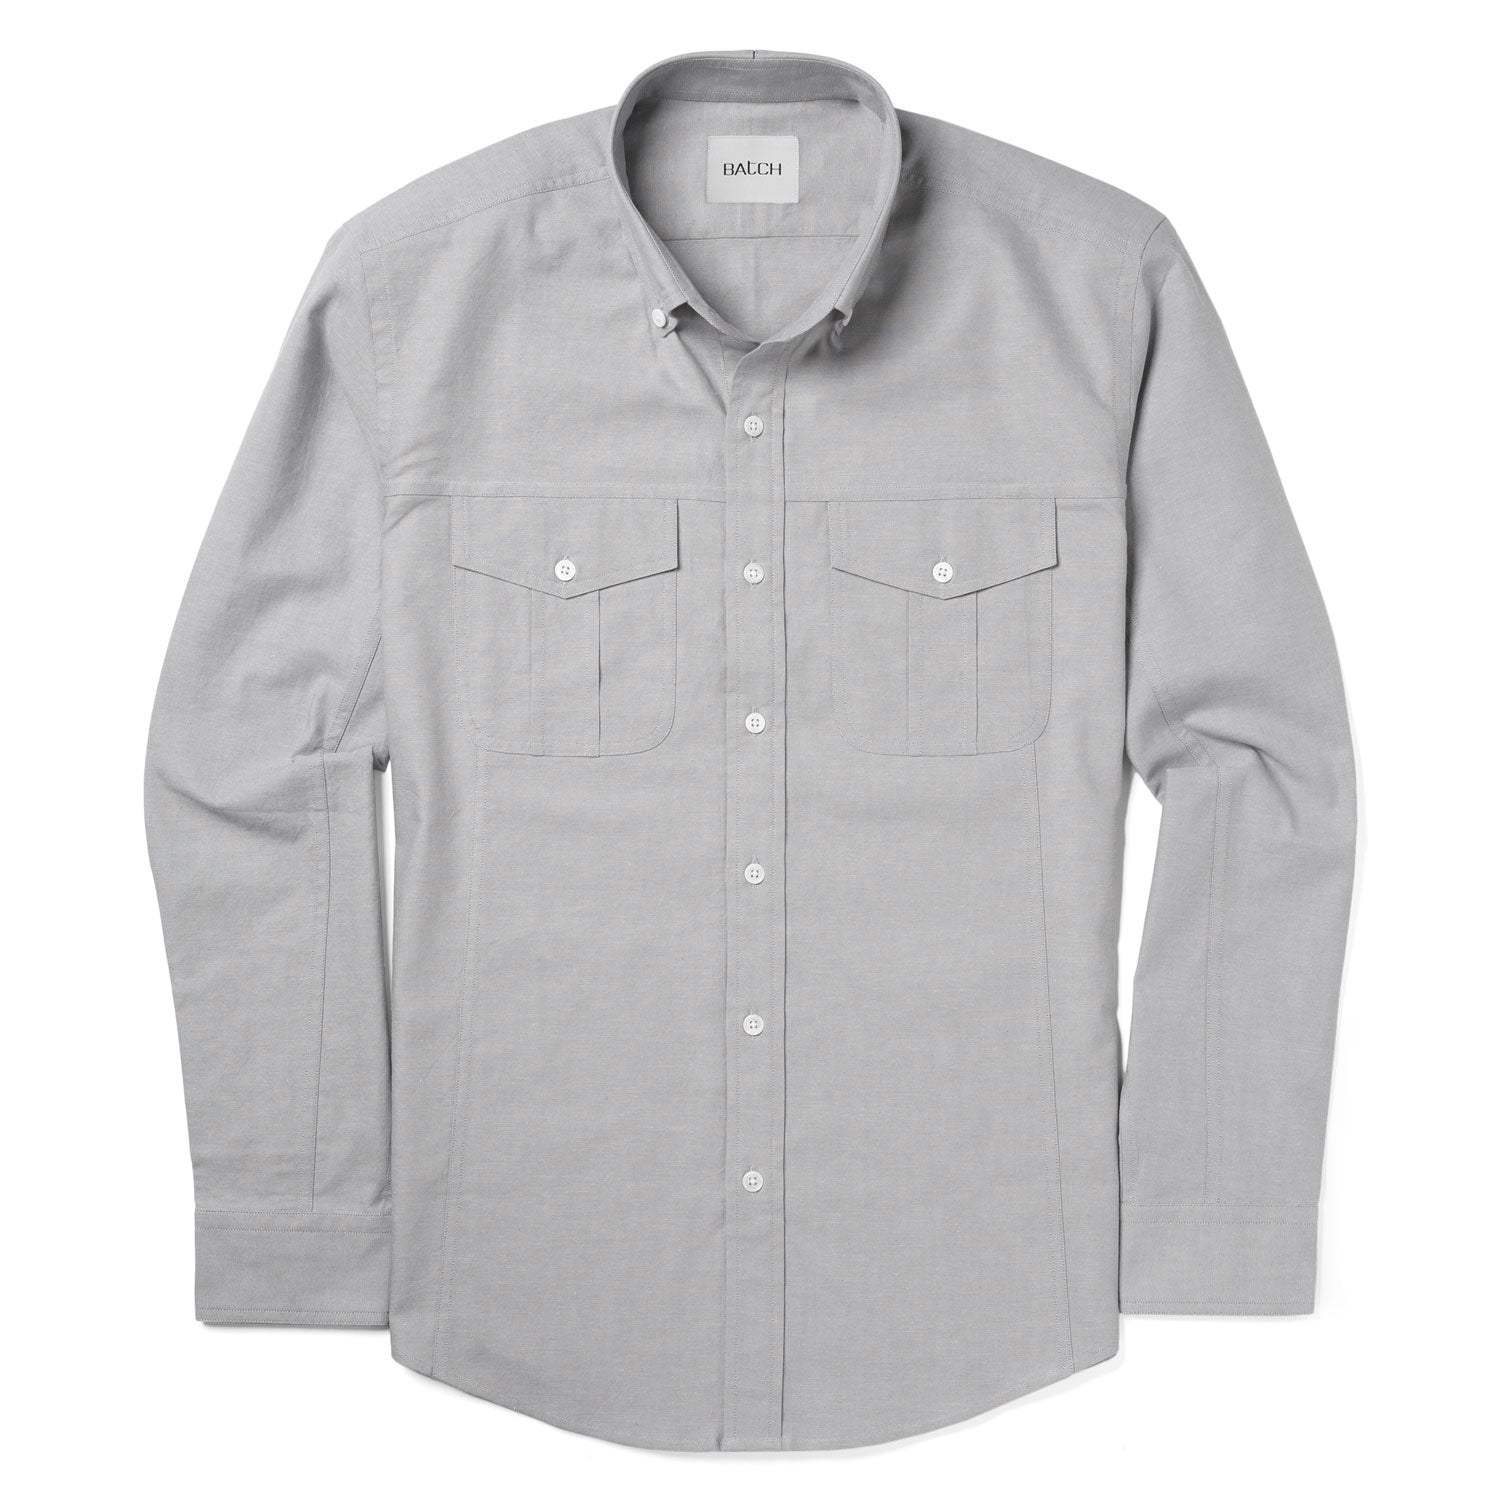 Editor Shirt – Aluminum Gray Oxford